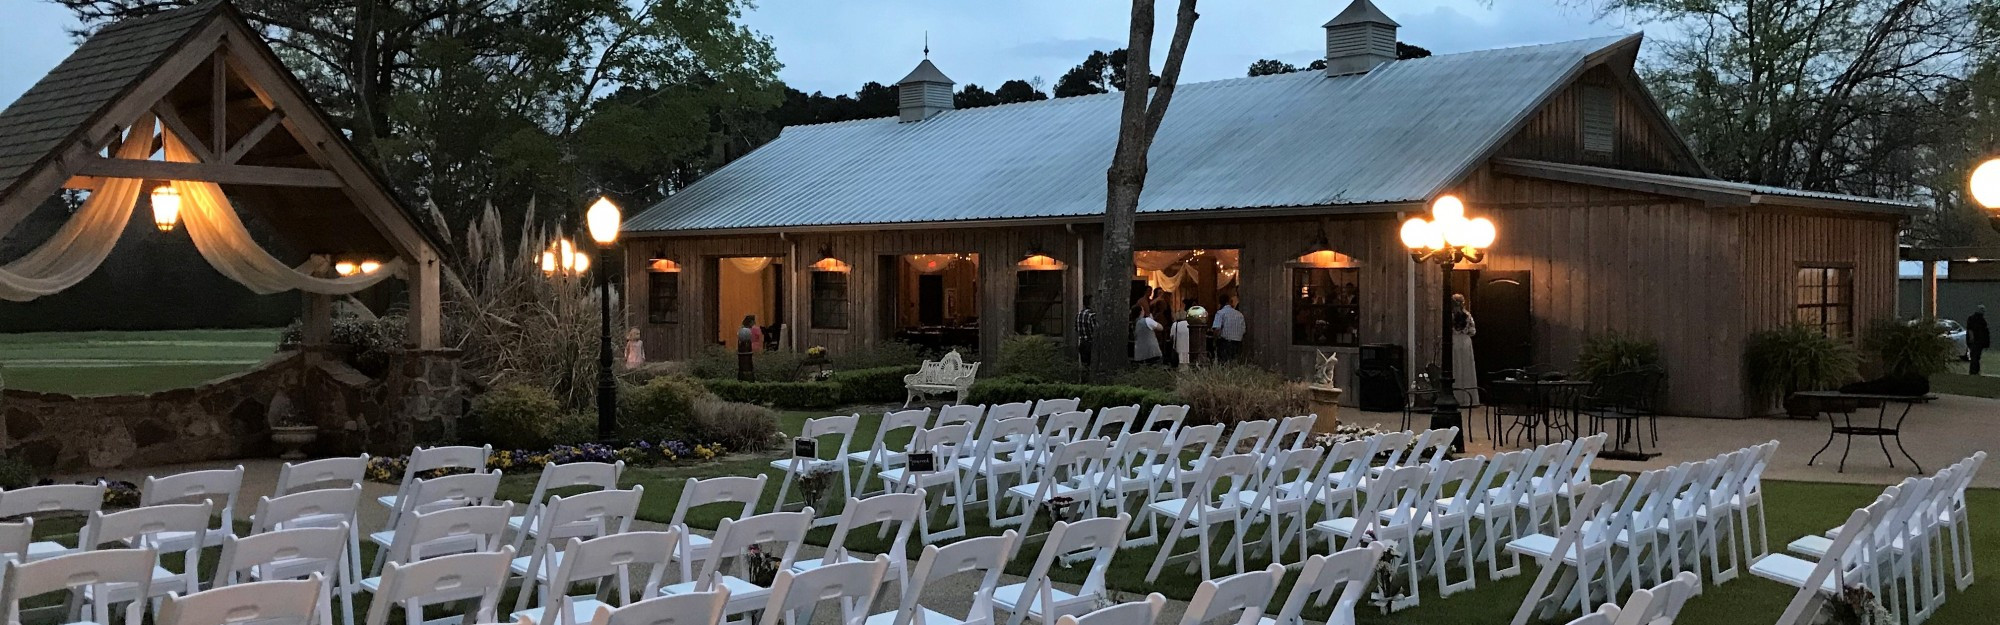 Barn Wedding Venues In Texas
 Barn Weddings and Reception Venues East Texas Longview